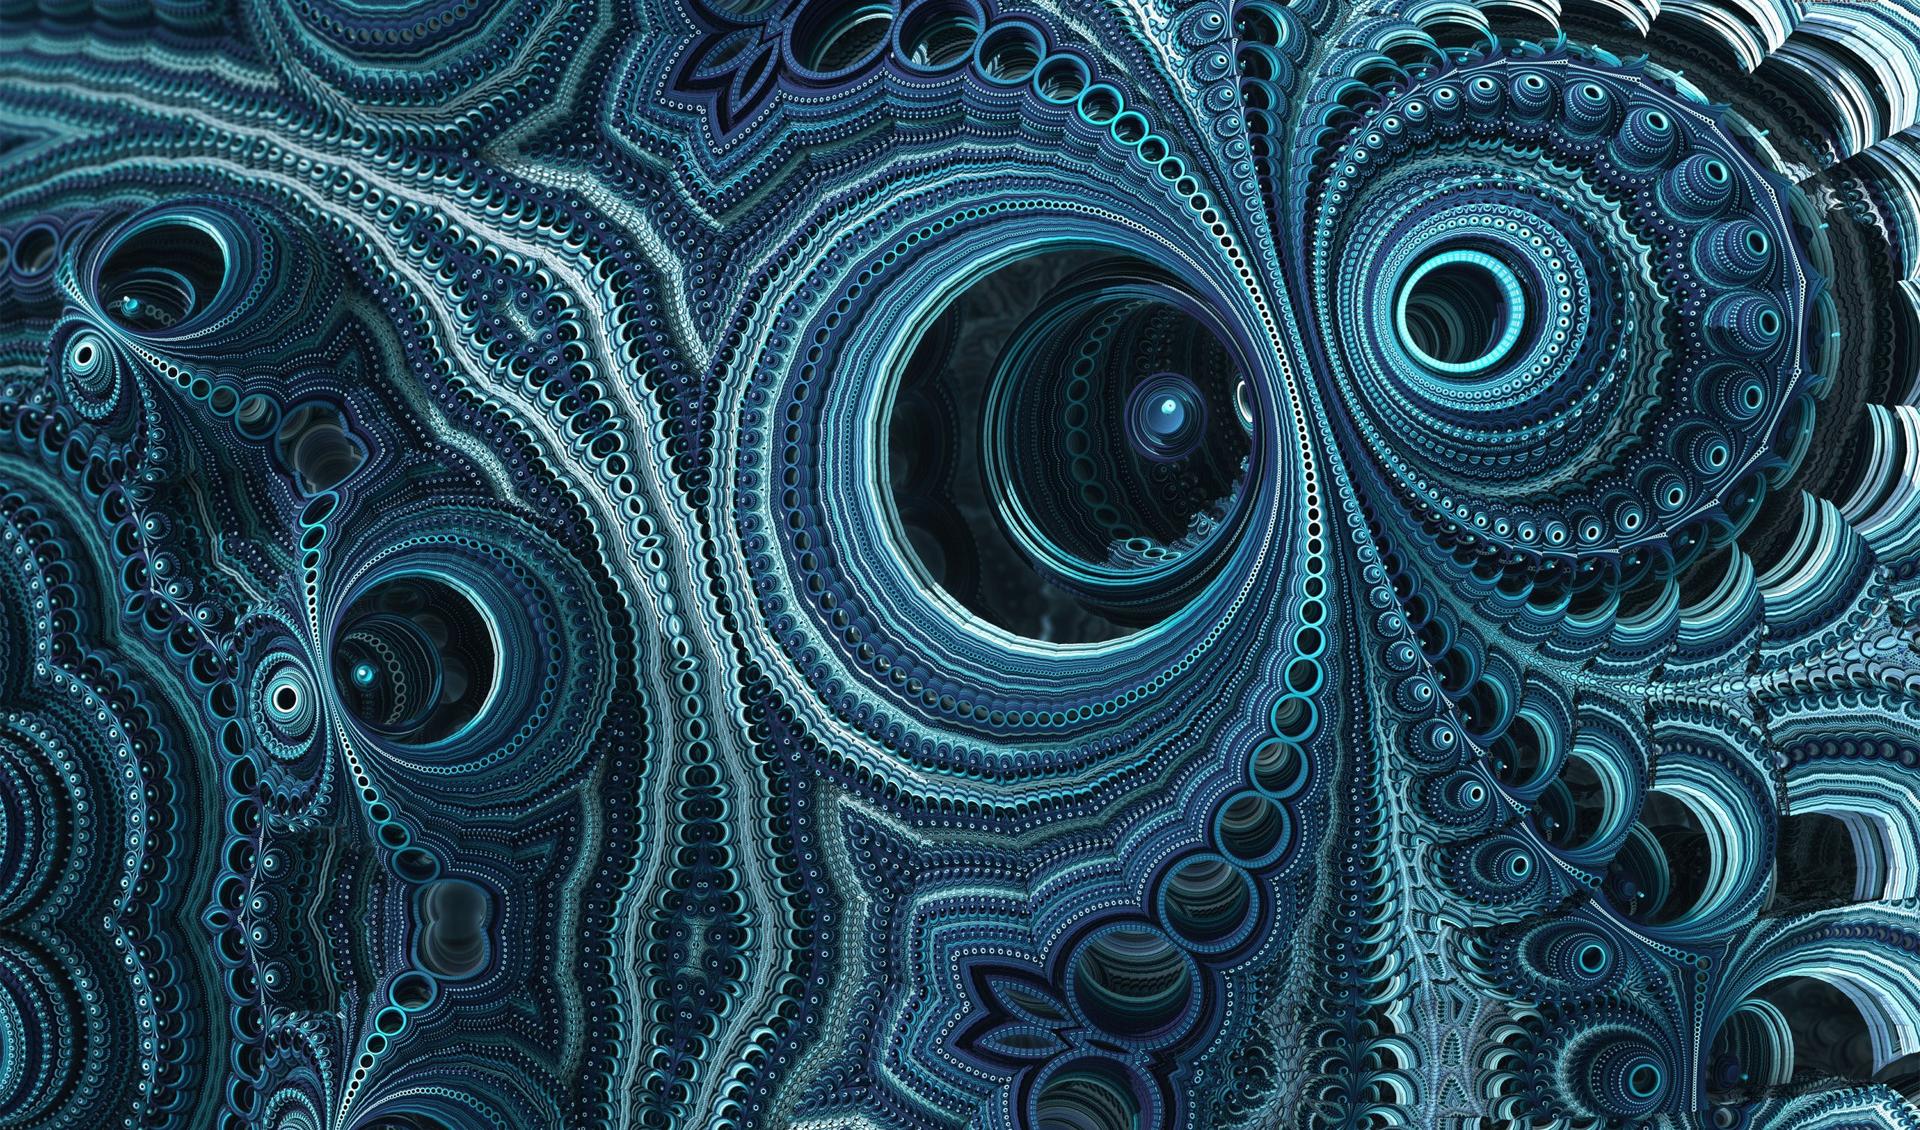 Blue fractal swirls at 2048 x 2048 iPad size wallpapers HD quality